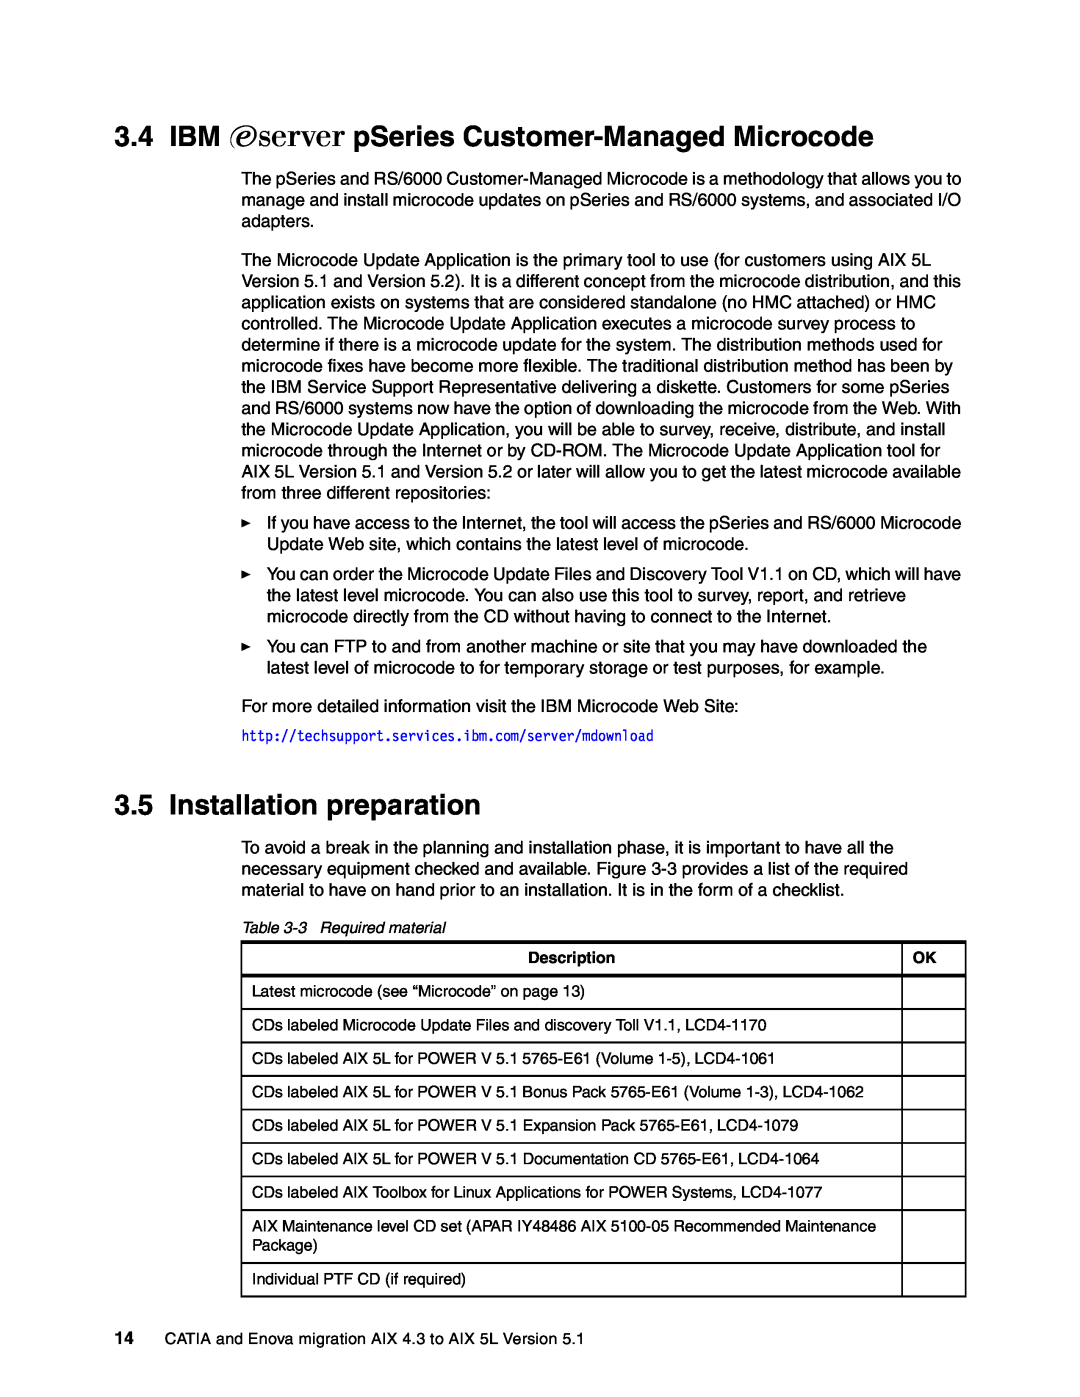 IBM AIX5L, AIX 4.3 manual IBM Sserver pSeries Customer-ManagedMicrocode, Installation preparation, Description 